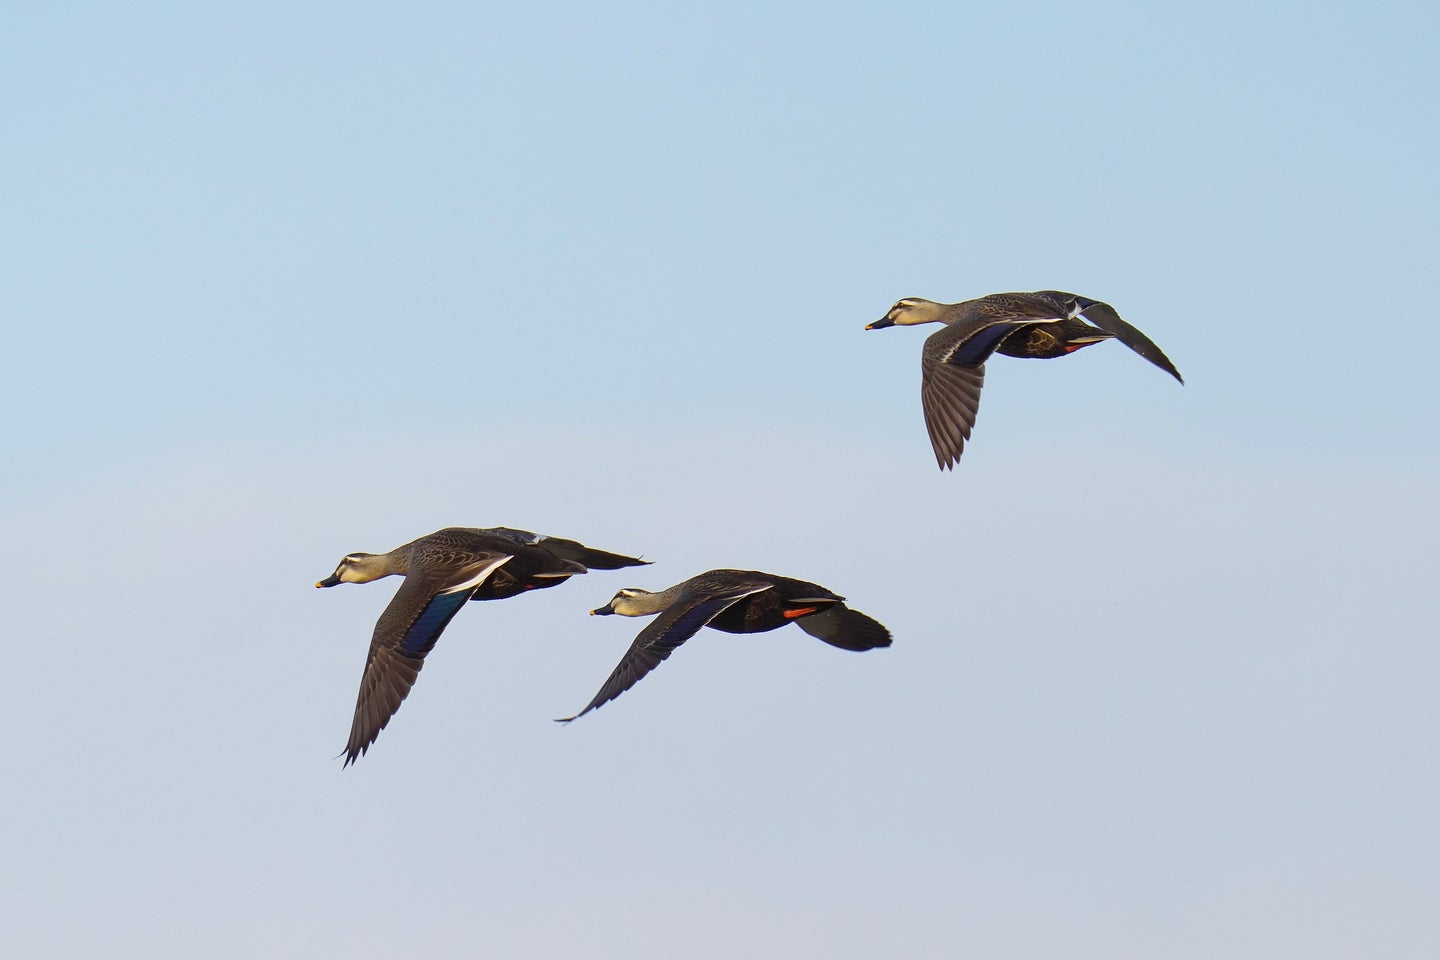 Three ducks flying in formation.